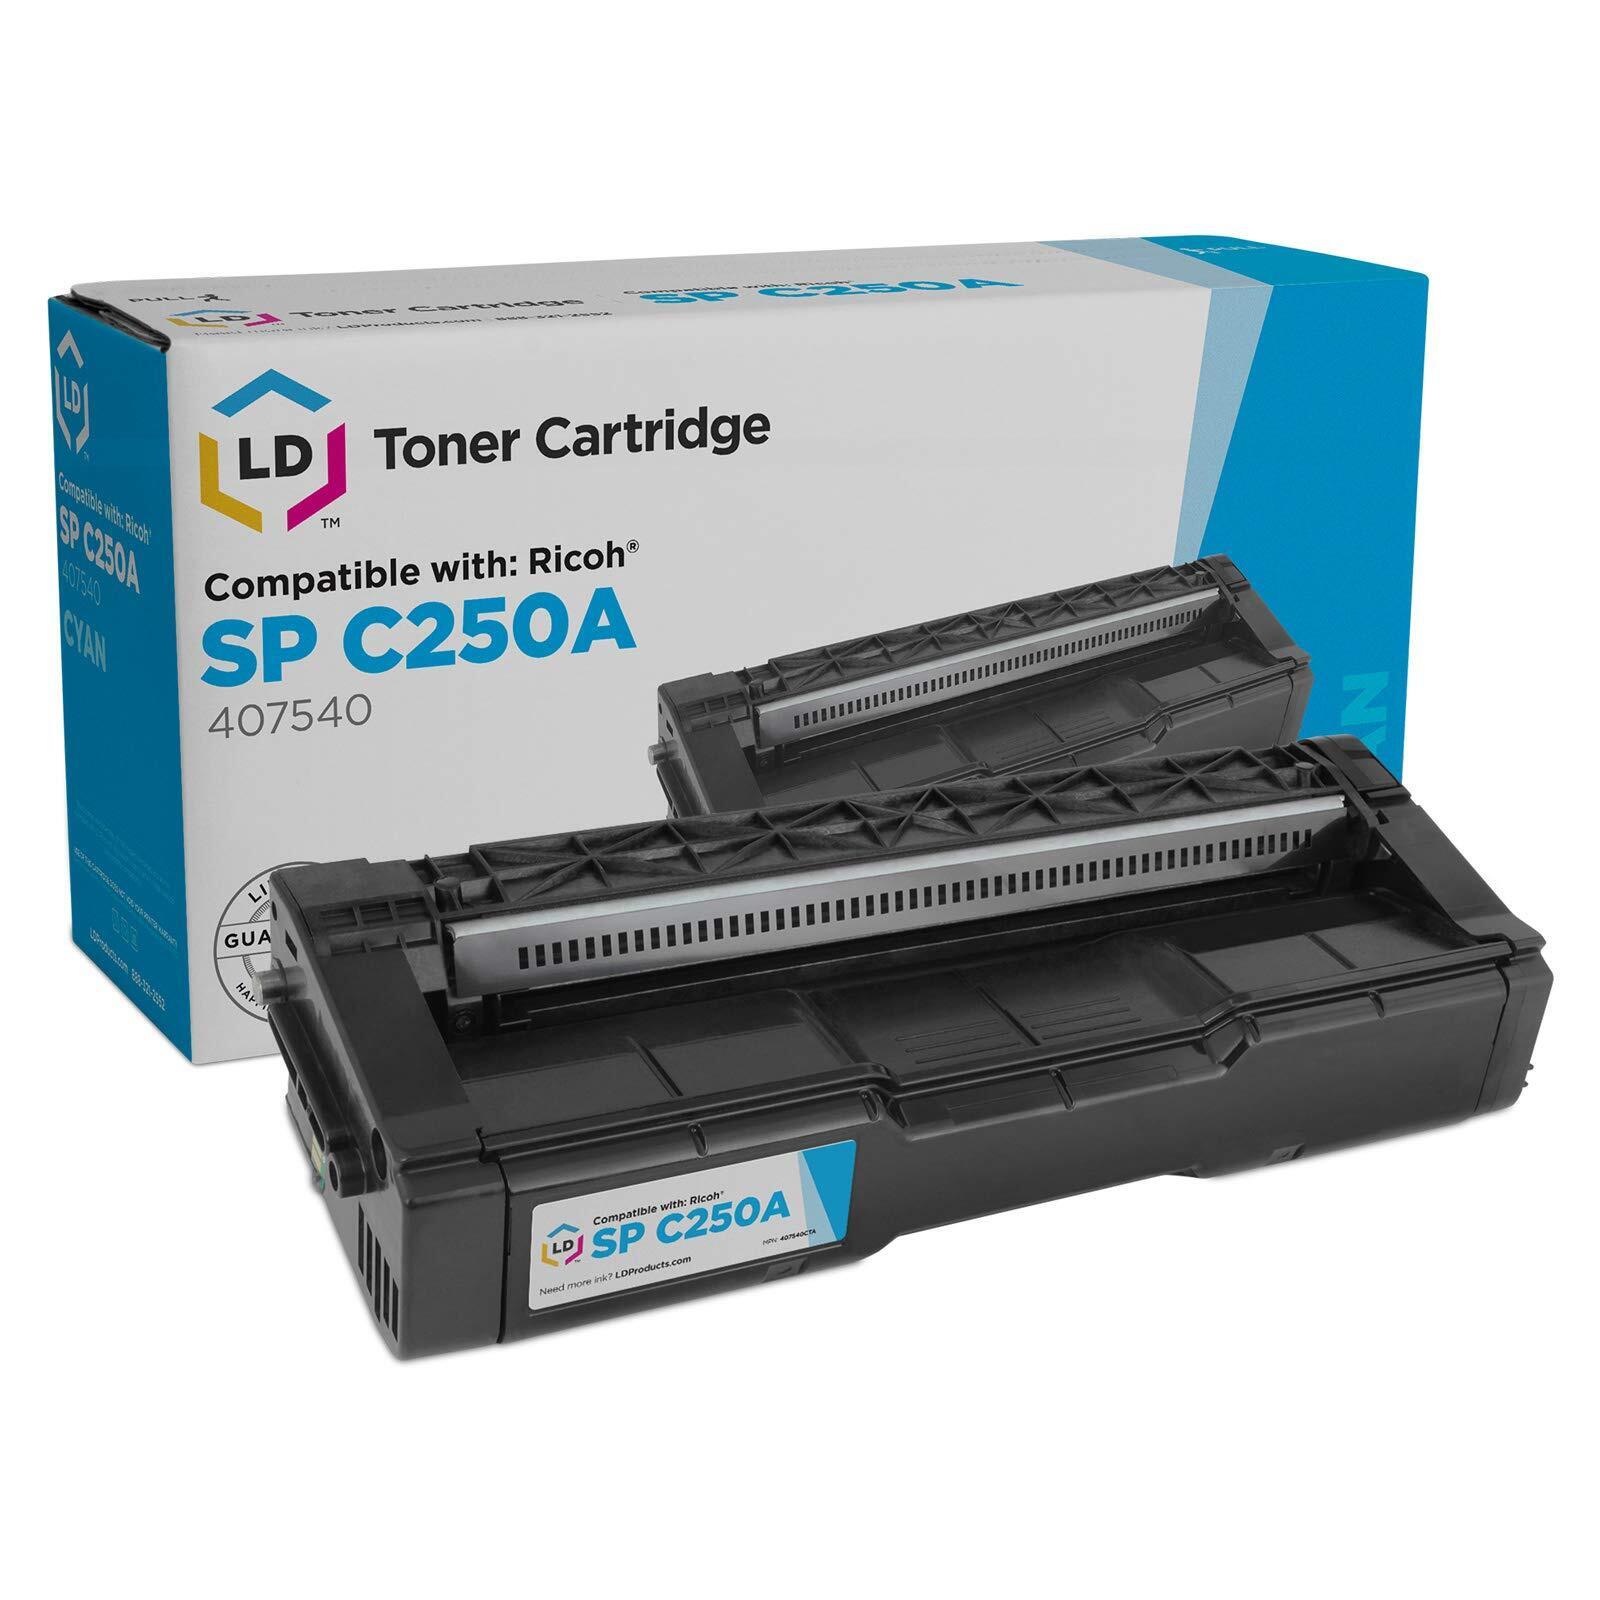 LD Compatible Toner Cartridge Replacement for Ricoh SP C250 407540 (Cyan)